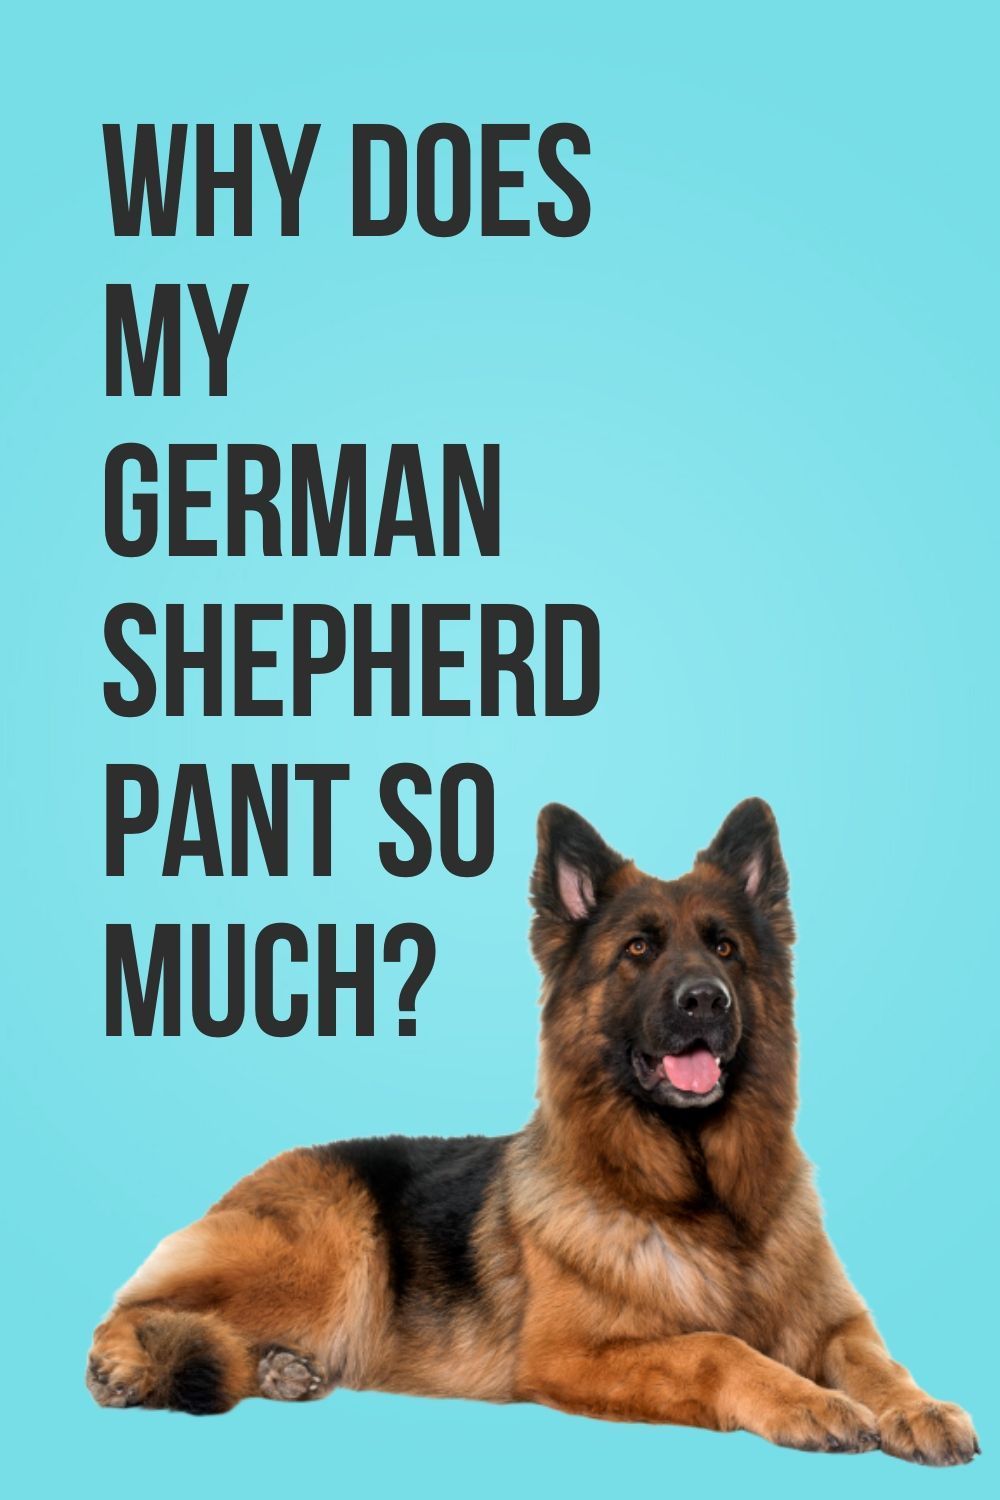 Why does my German Shepherd pant so much? in 2020